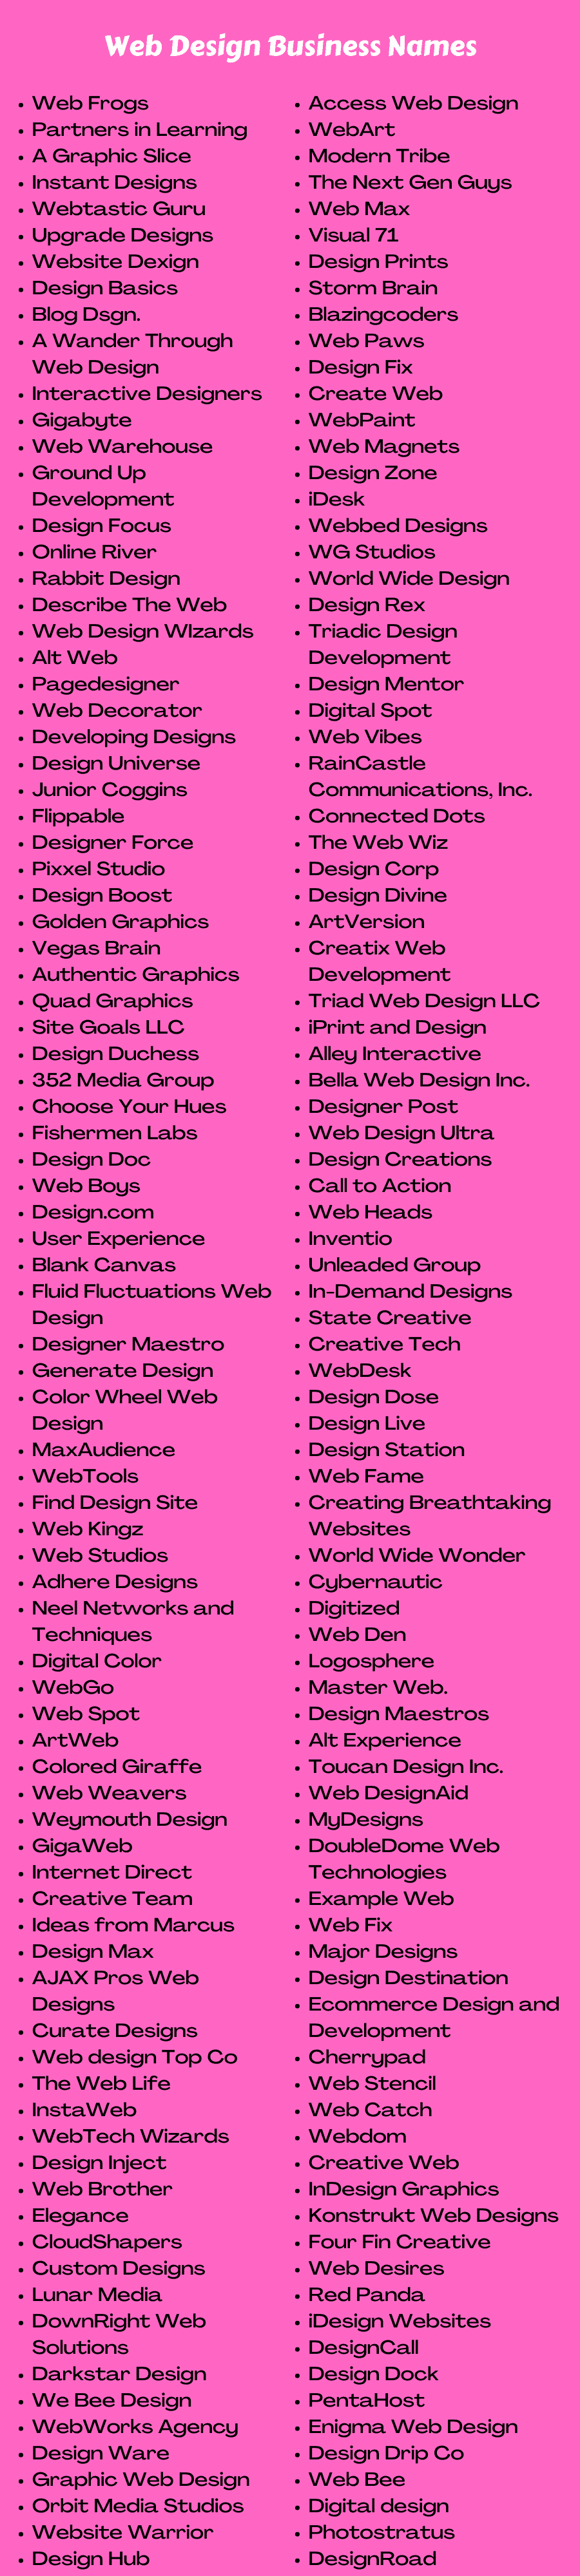 Web Design Business Names